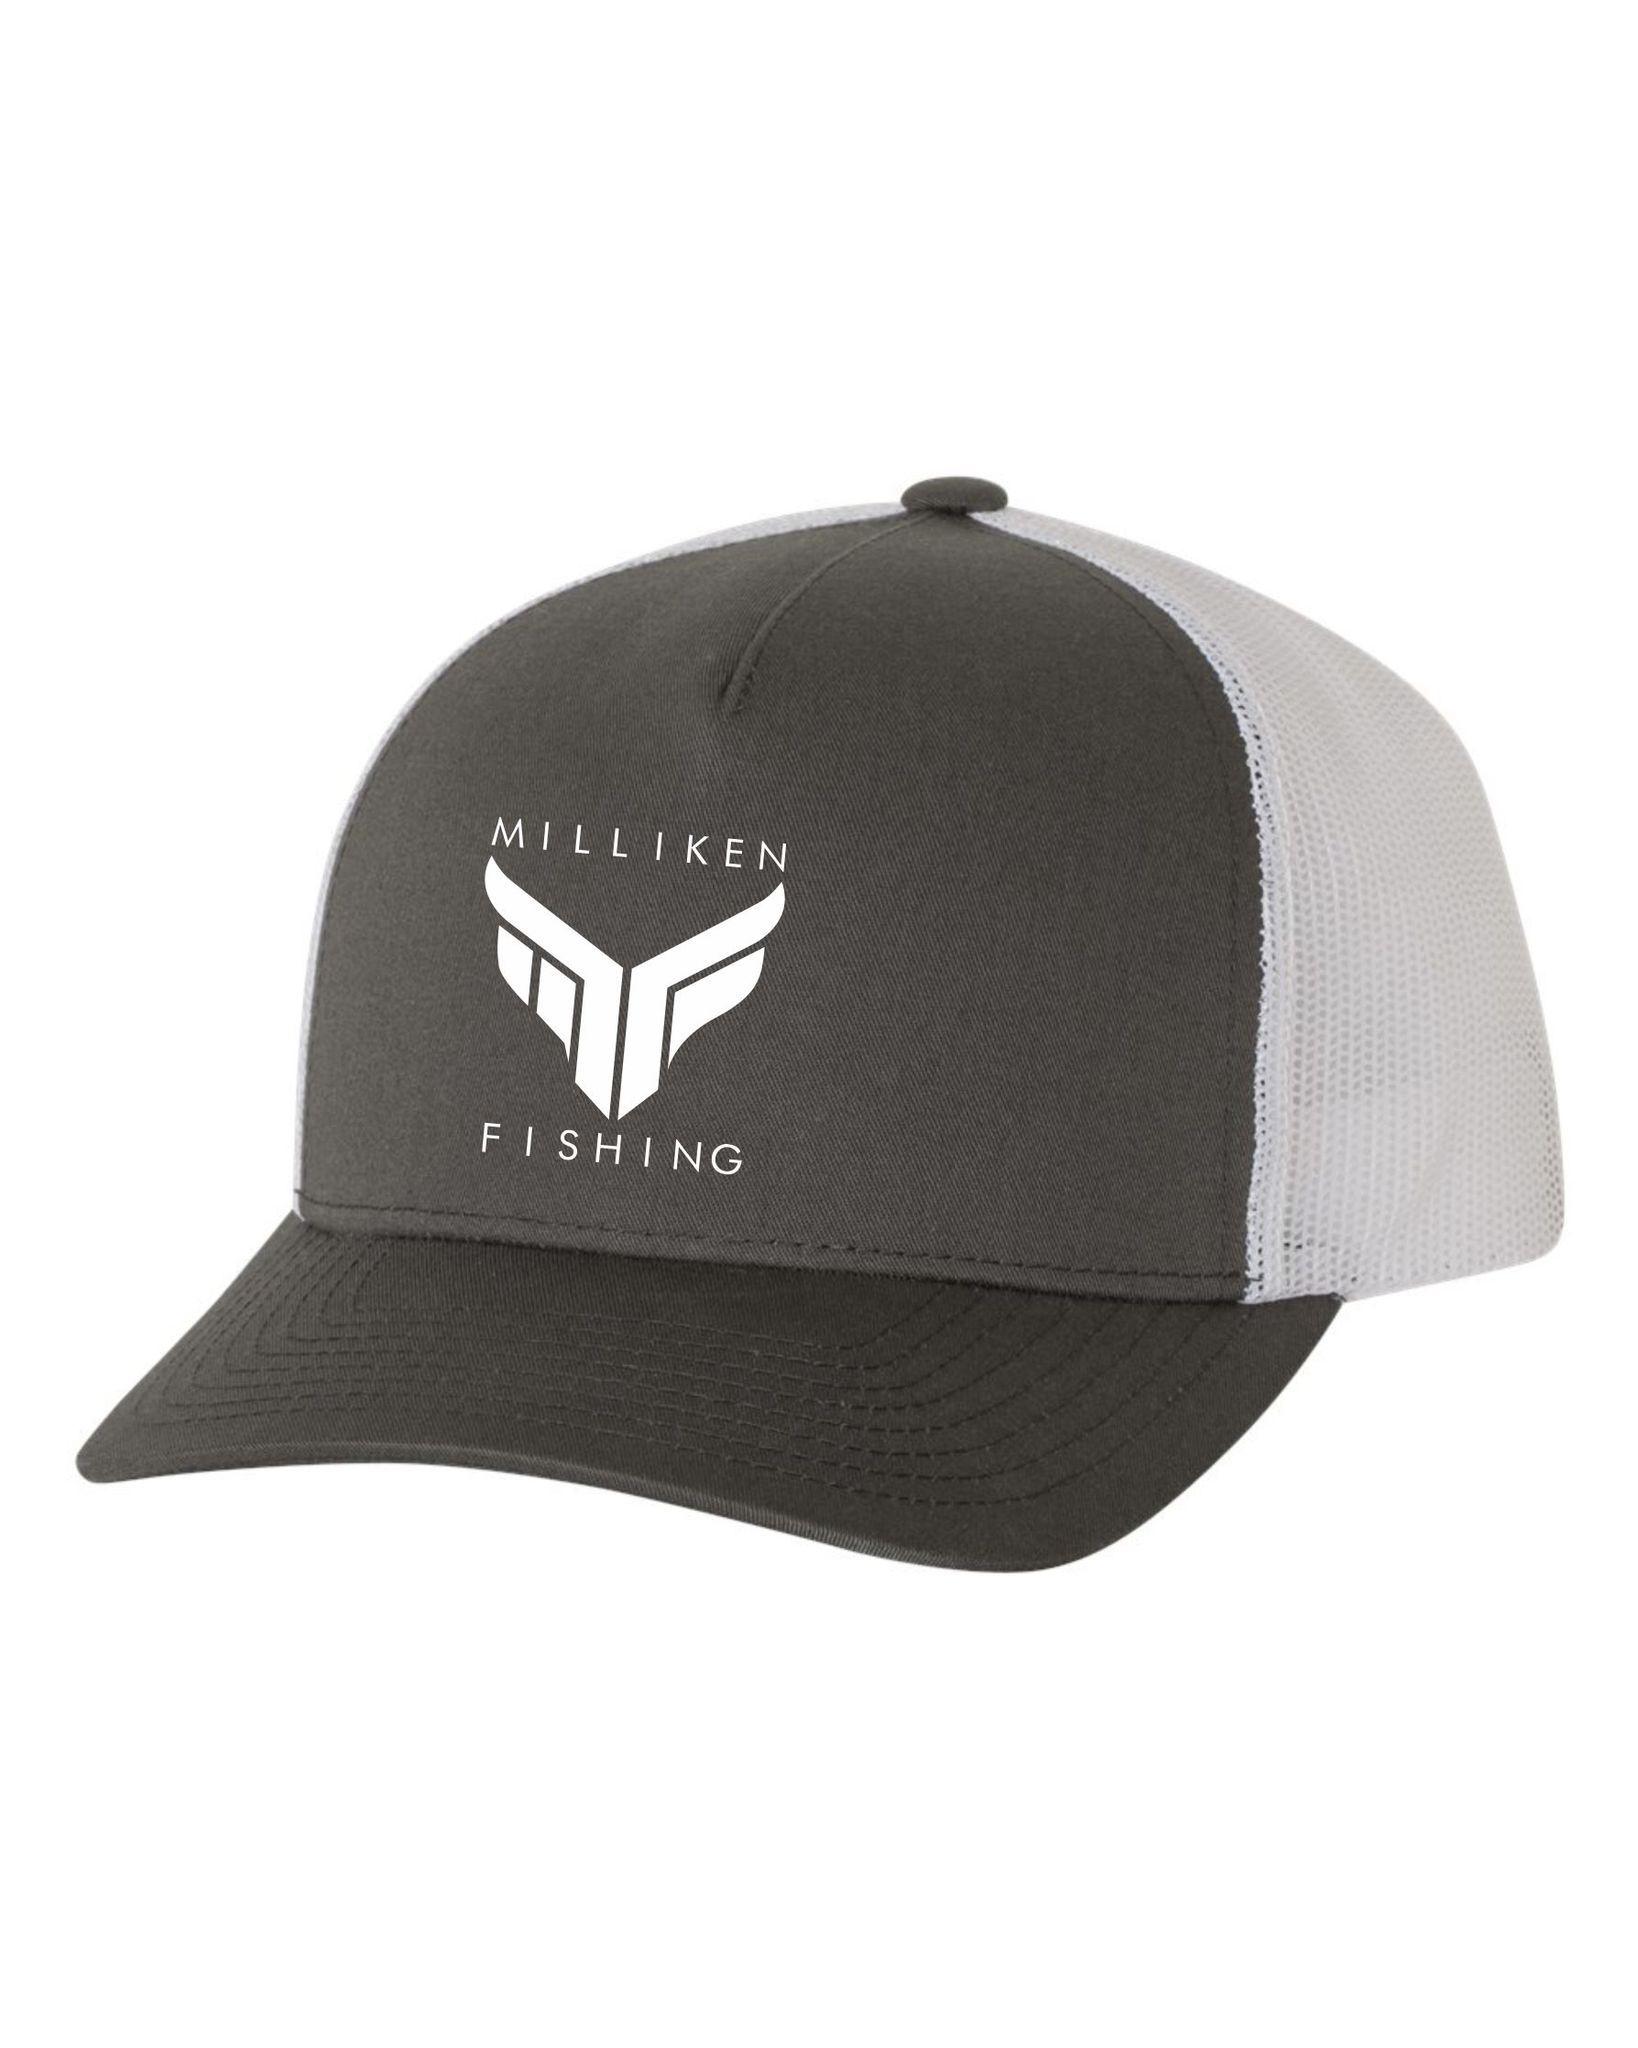 Milliken Logo - Milliken Fishing Semi Curved Bill (Charcoal)